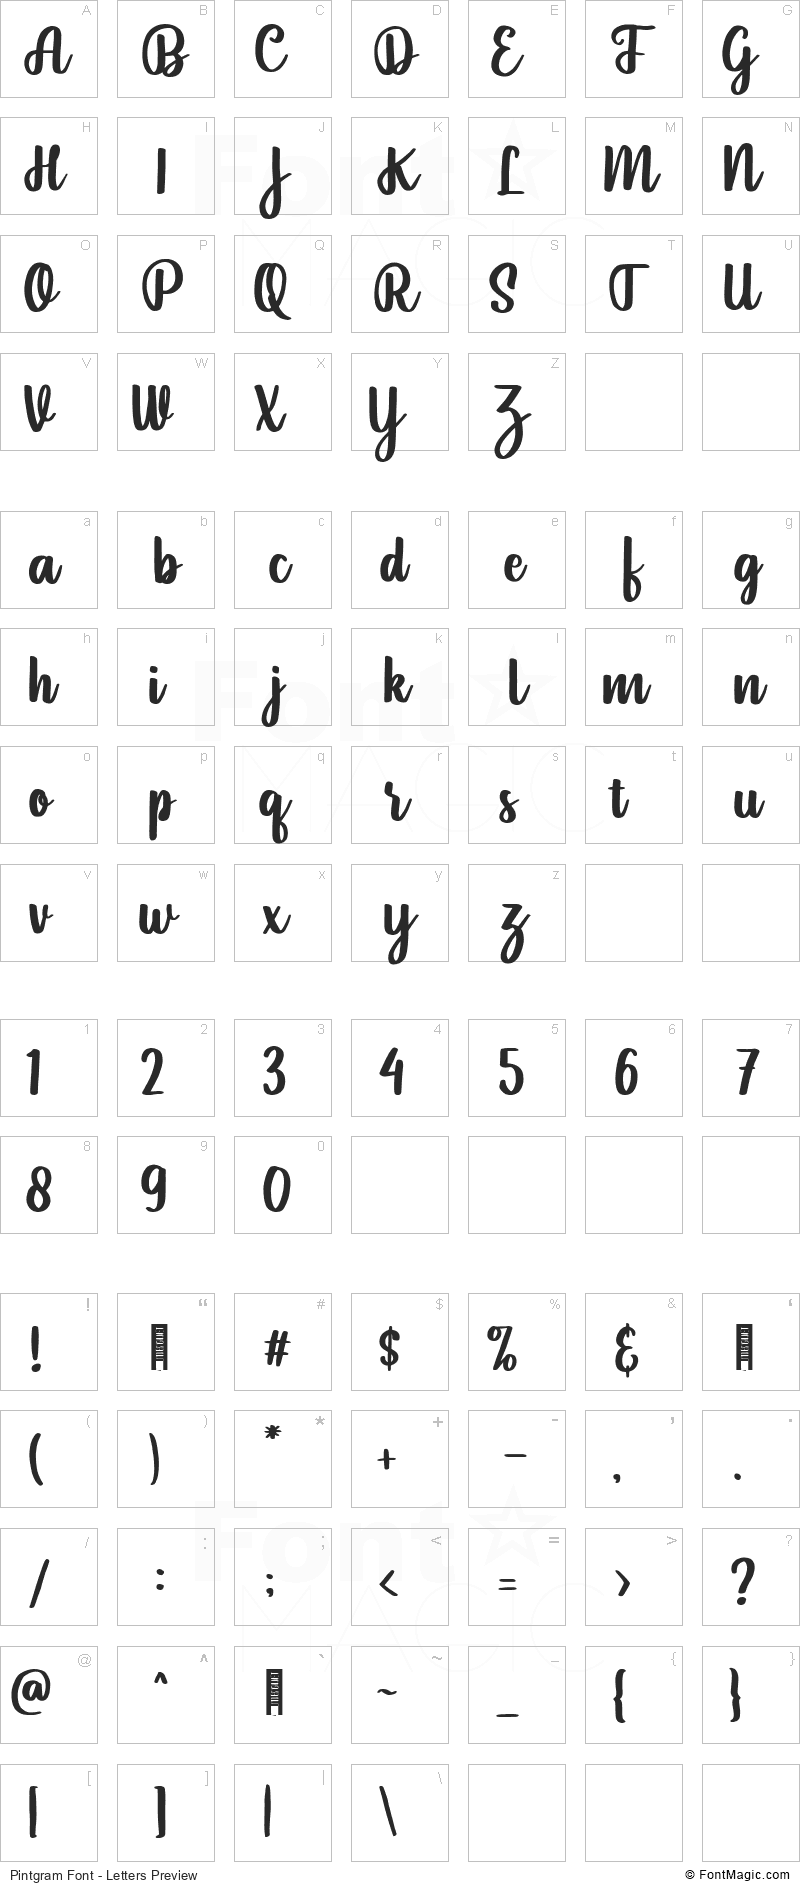 Pintgram Font - All Latters Preview Chart